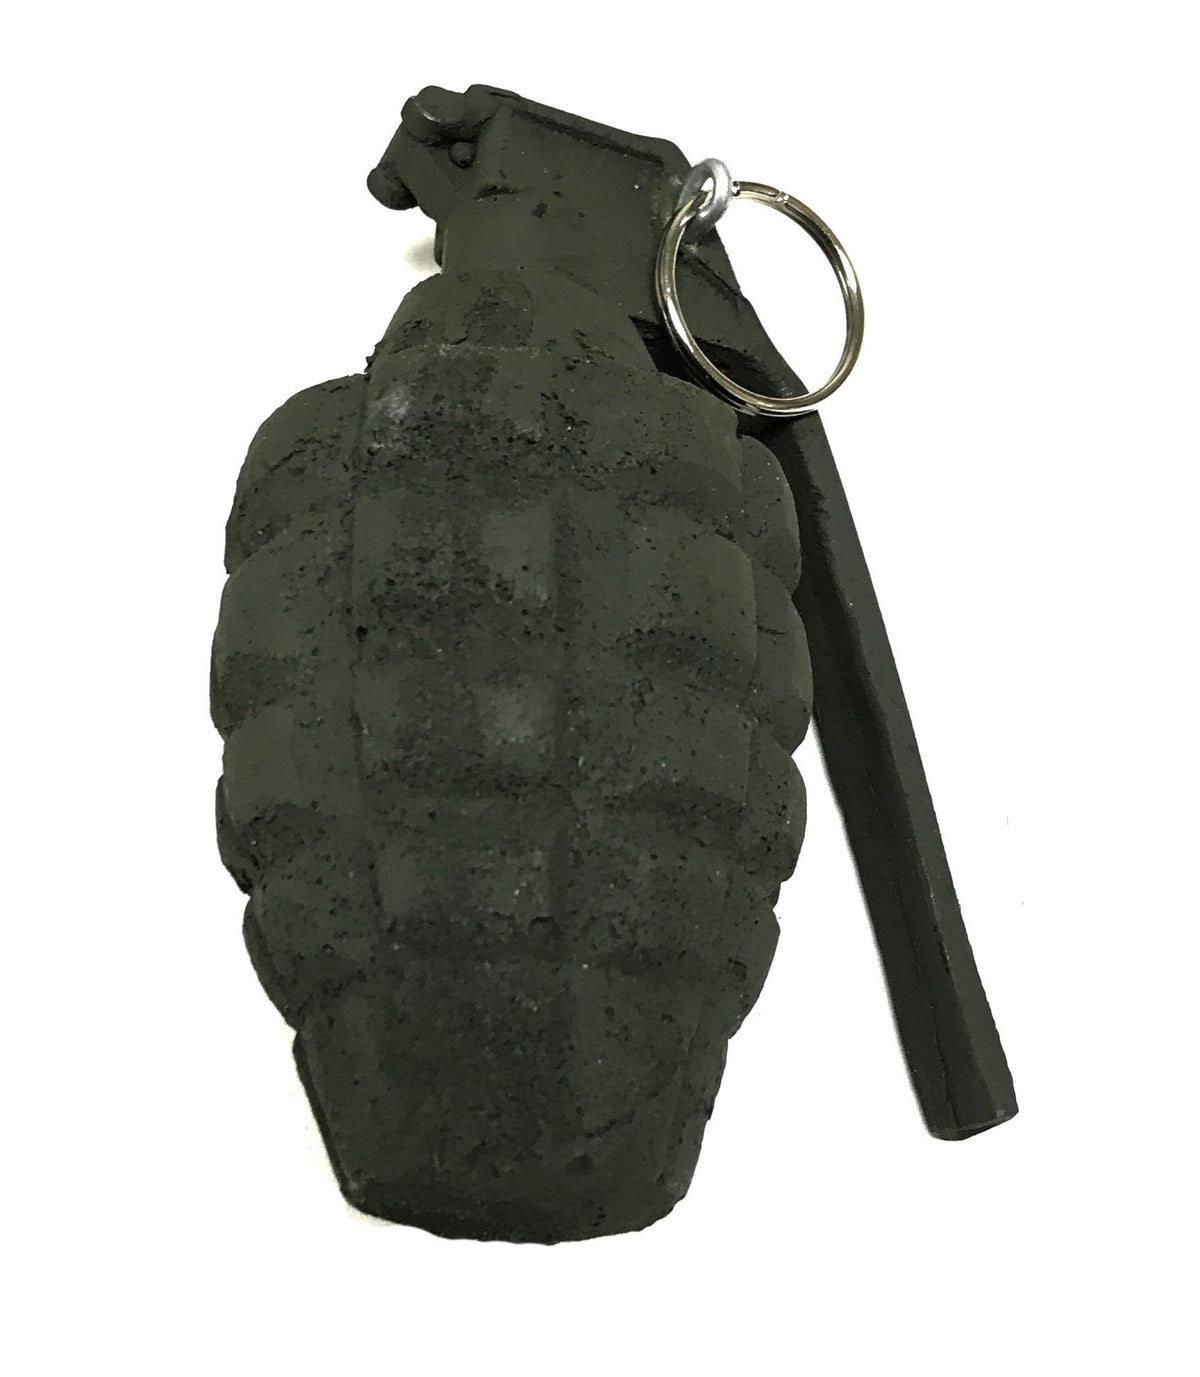 Foam Rubber Pineapple Hand Grenade Inert Prop with Metal Ring and